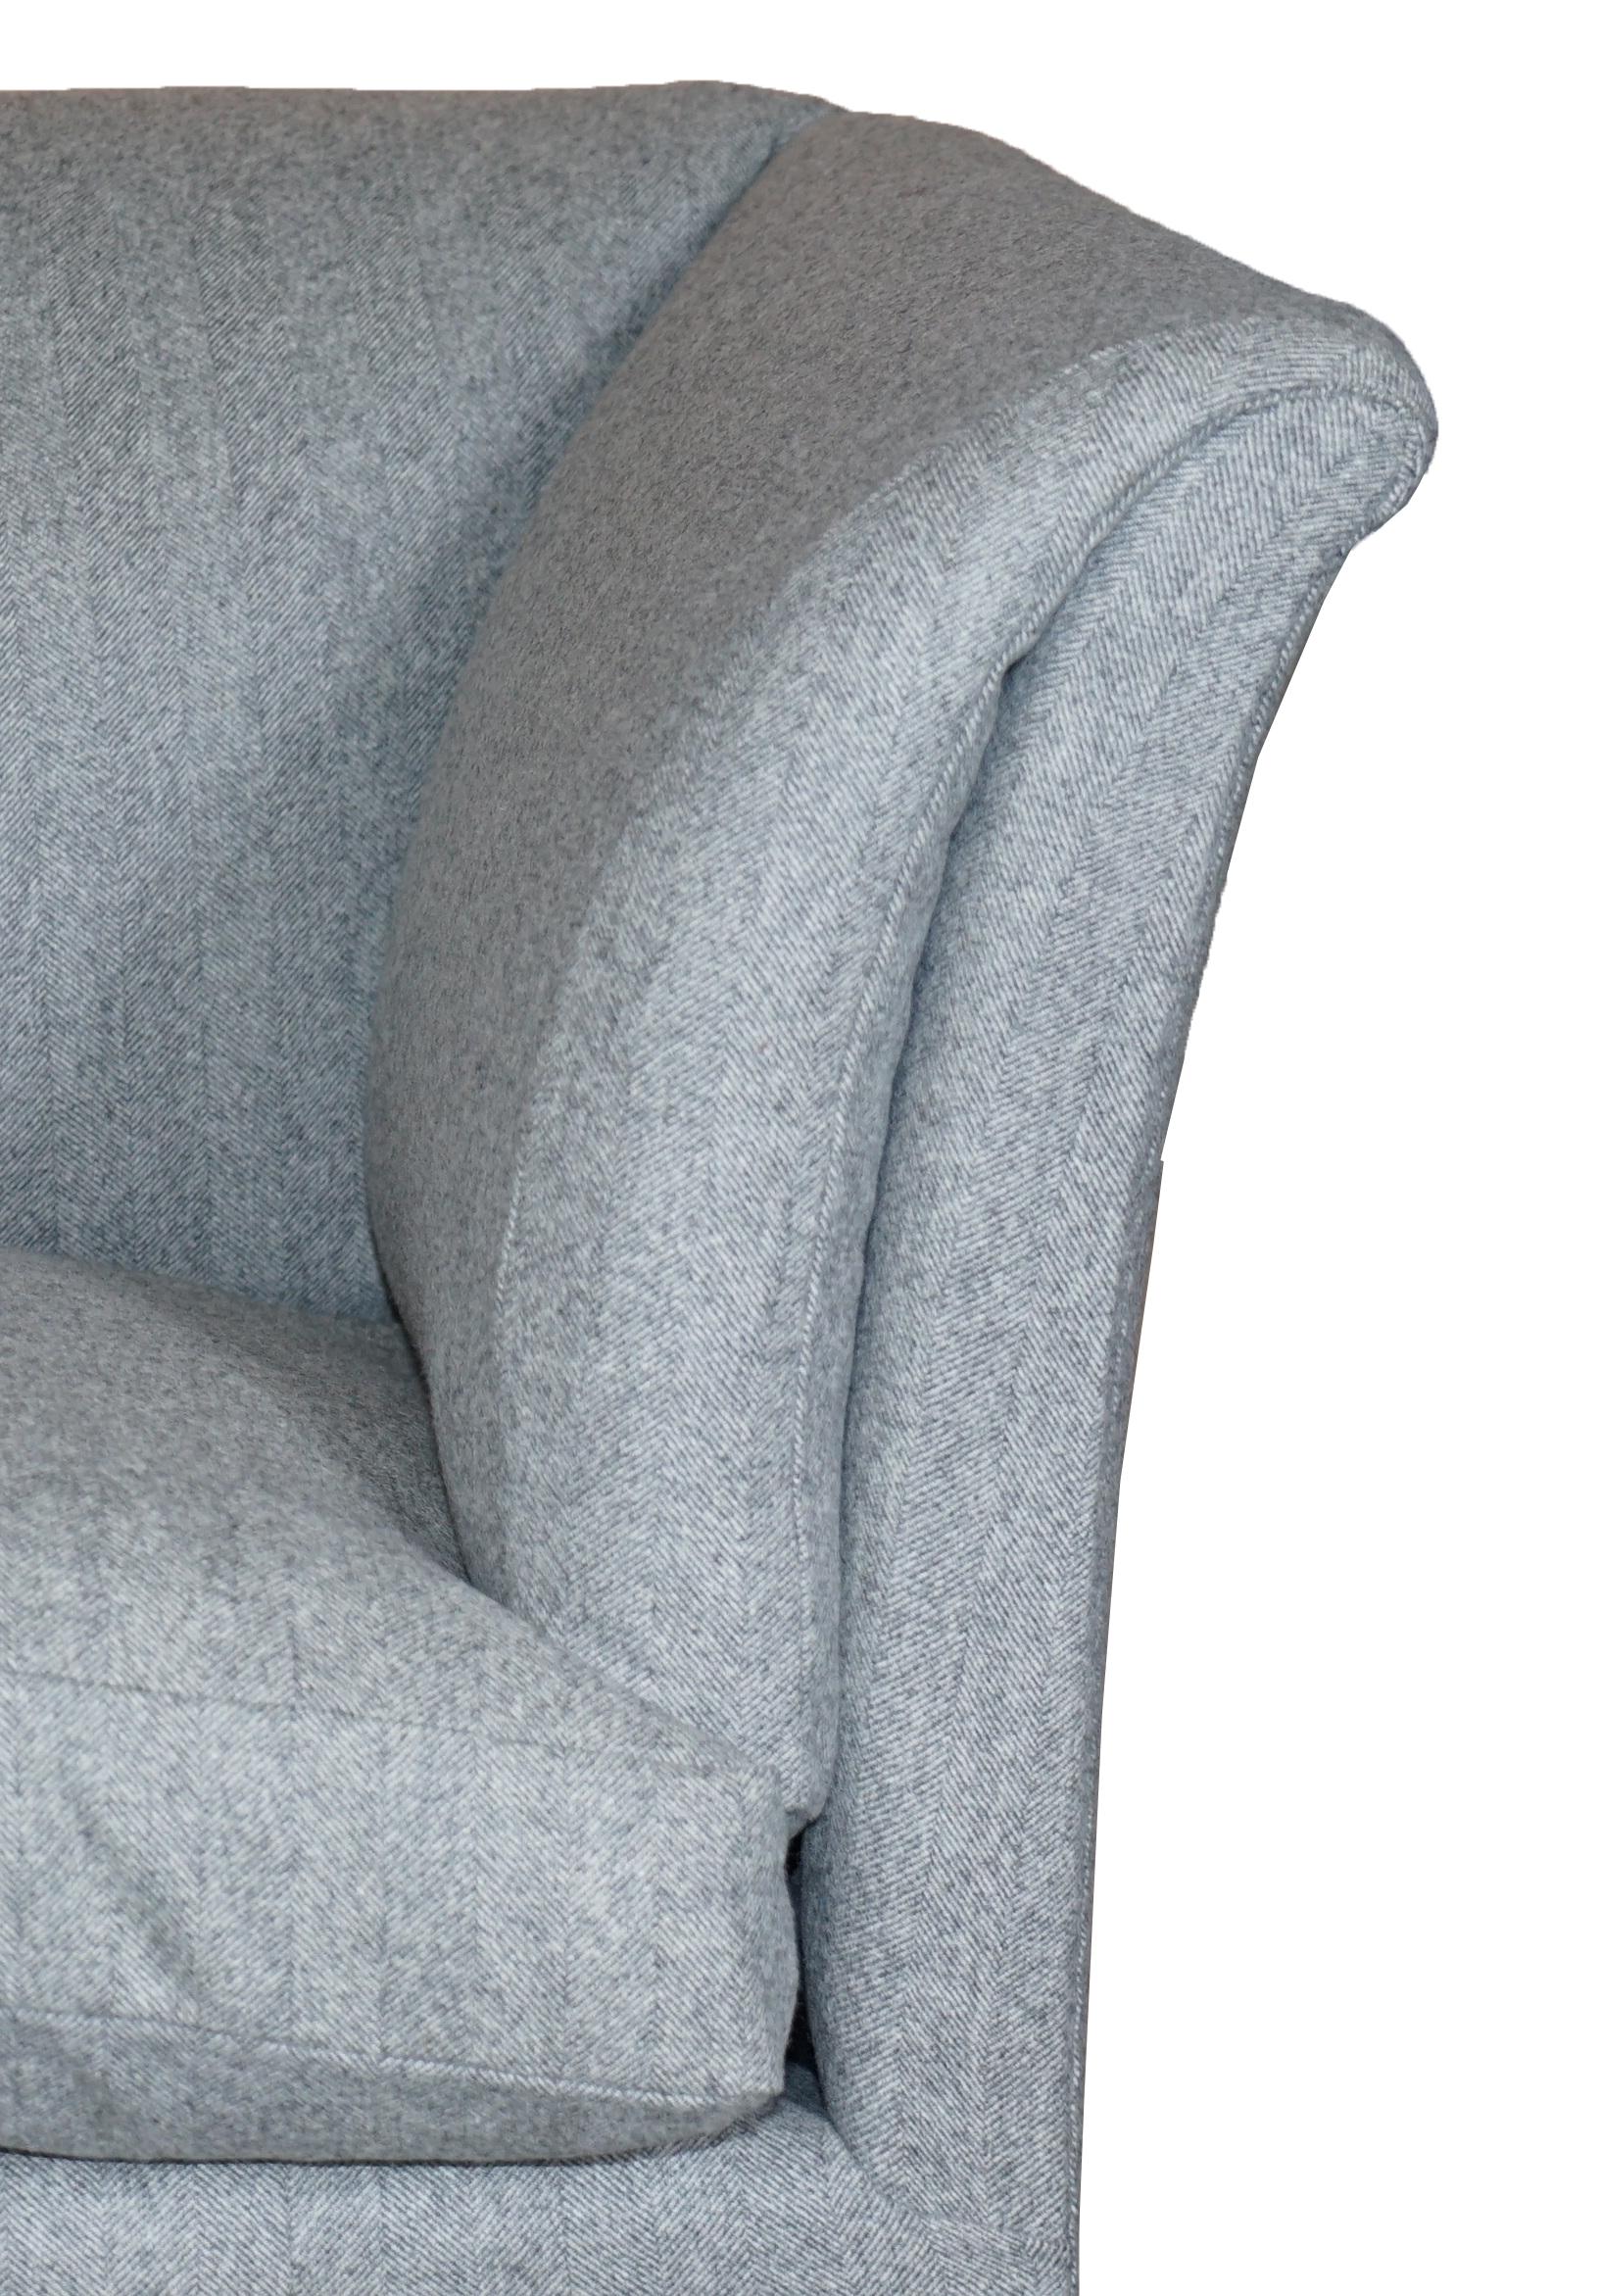 Fully Restored Howard & Son's Baring Sofa Grey Herringbone 100% Wool Upholstery For Sale 4